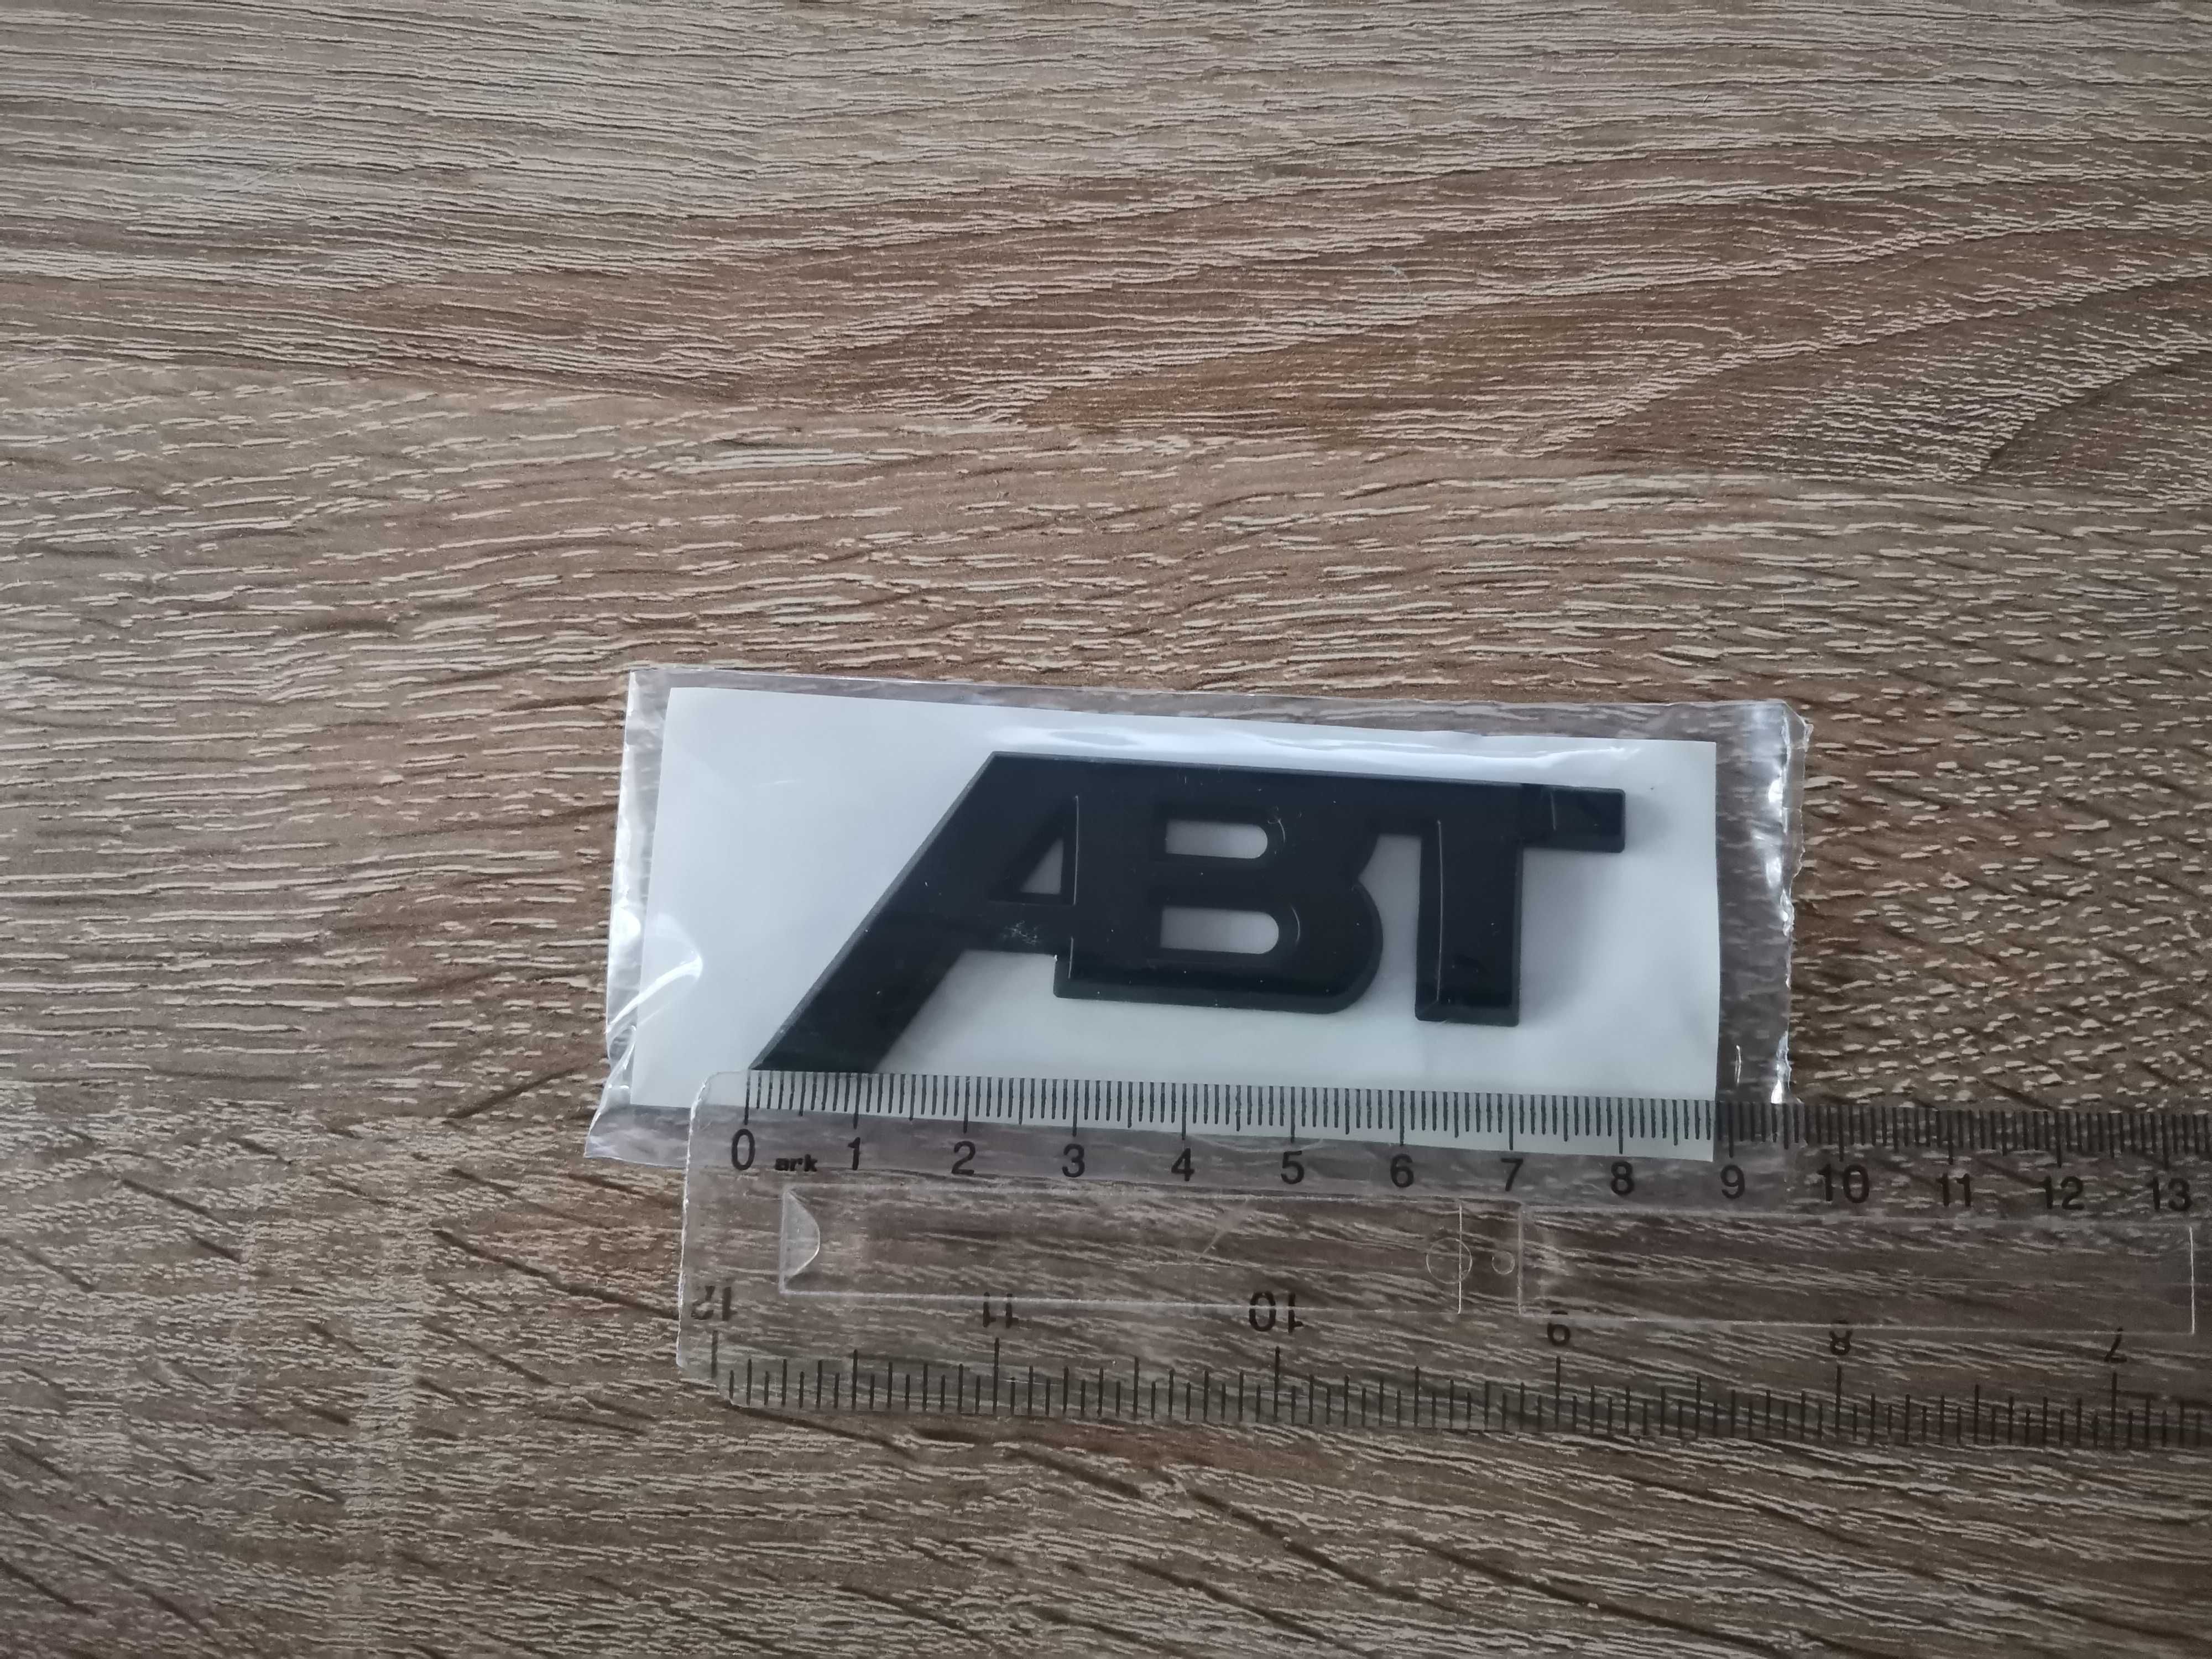 Ауди АБТ Audi ABT емблеми лога надписи